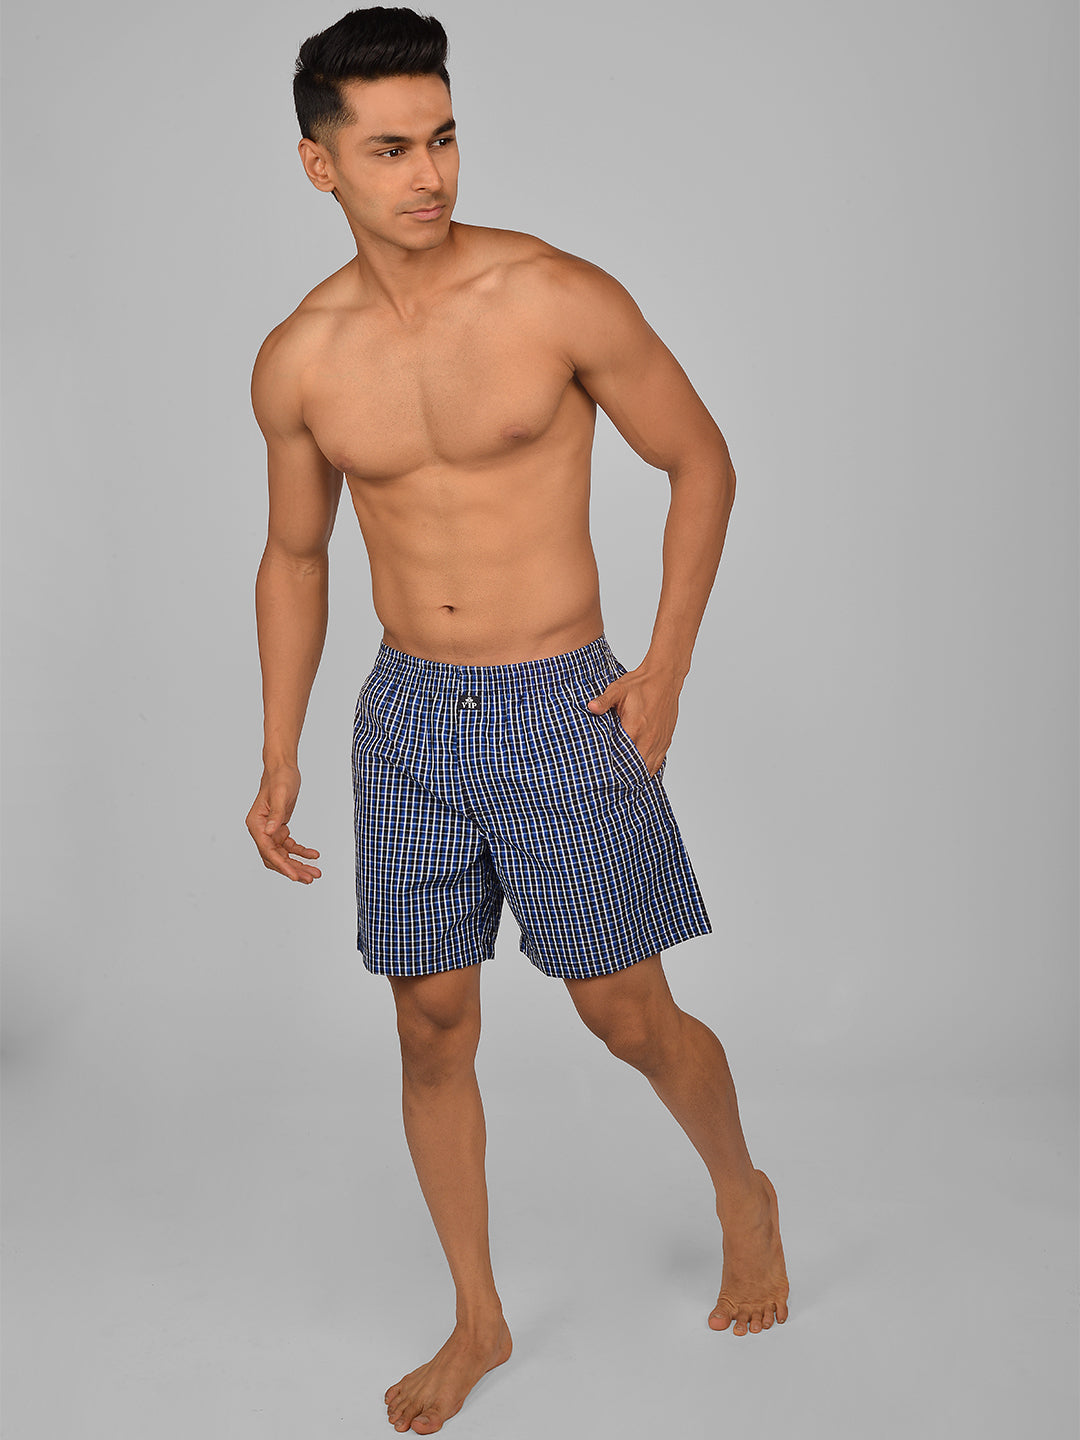 Boxer shorts for men, Buy online